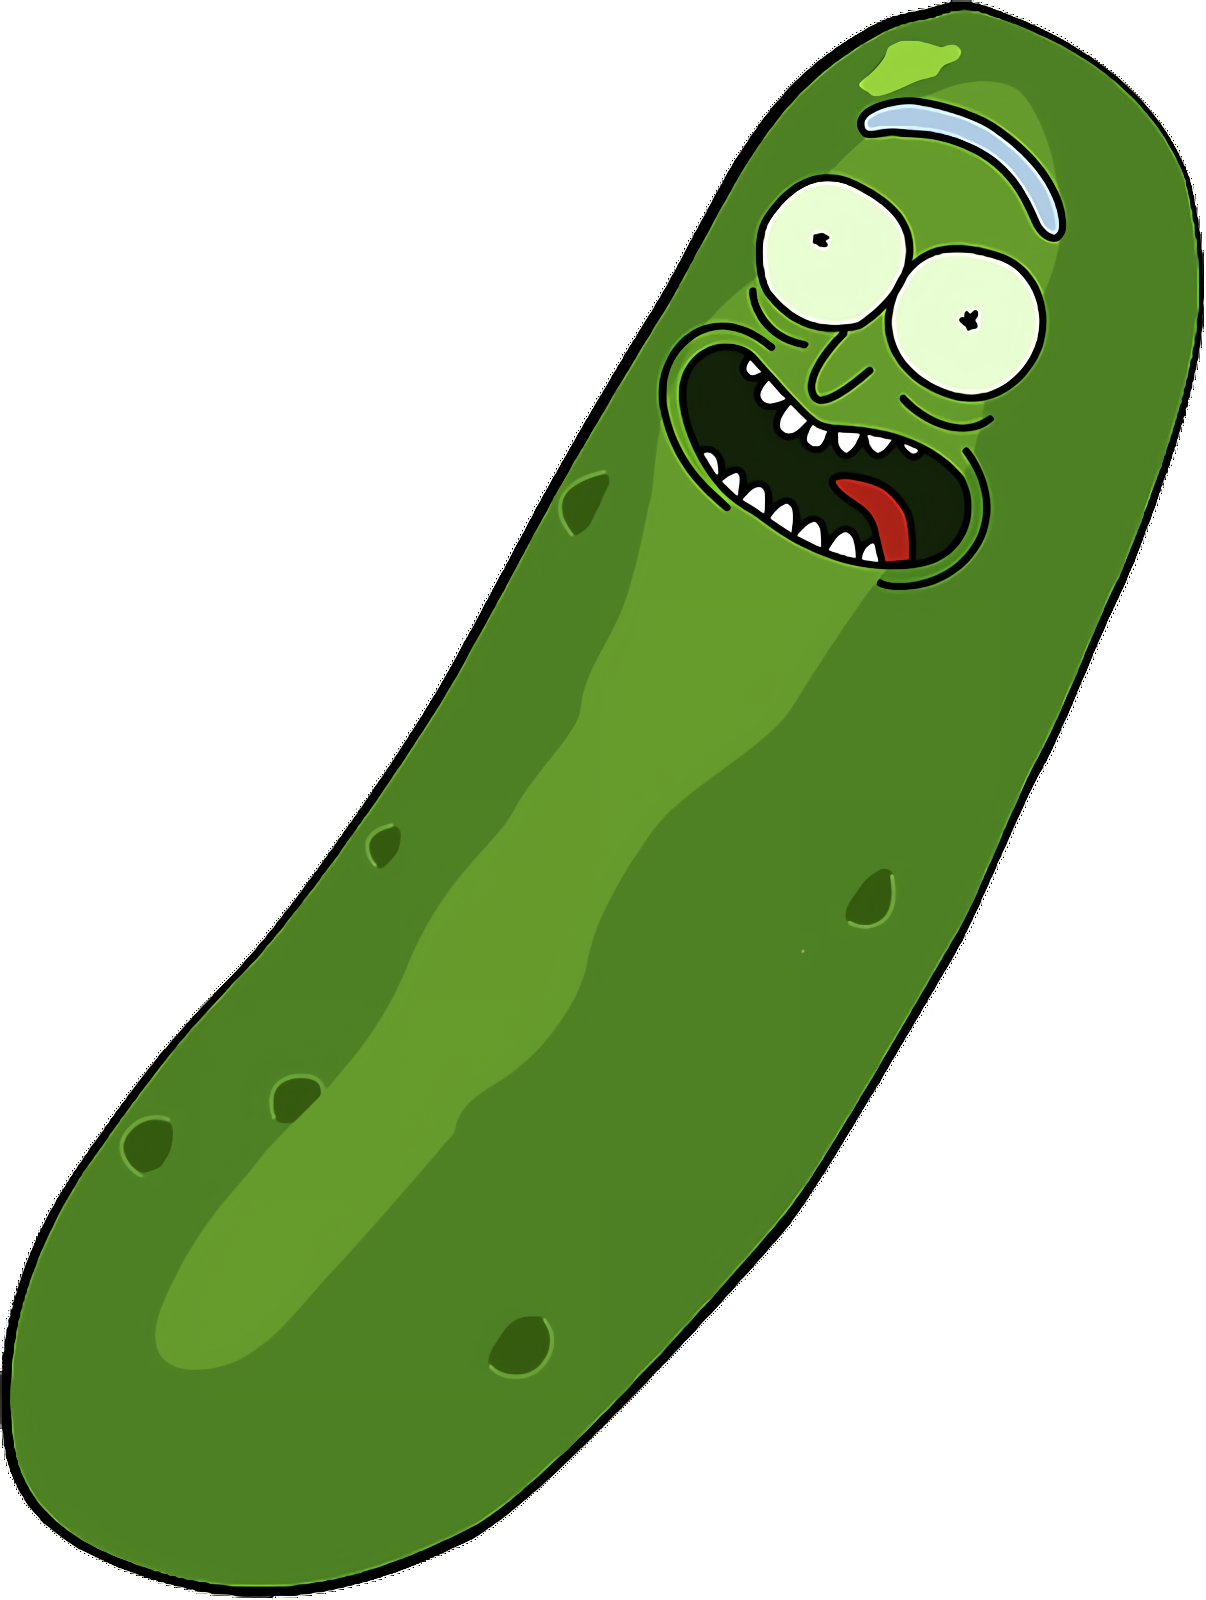 Pickle Rick Vore